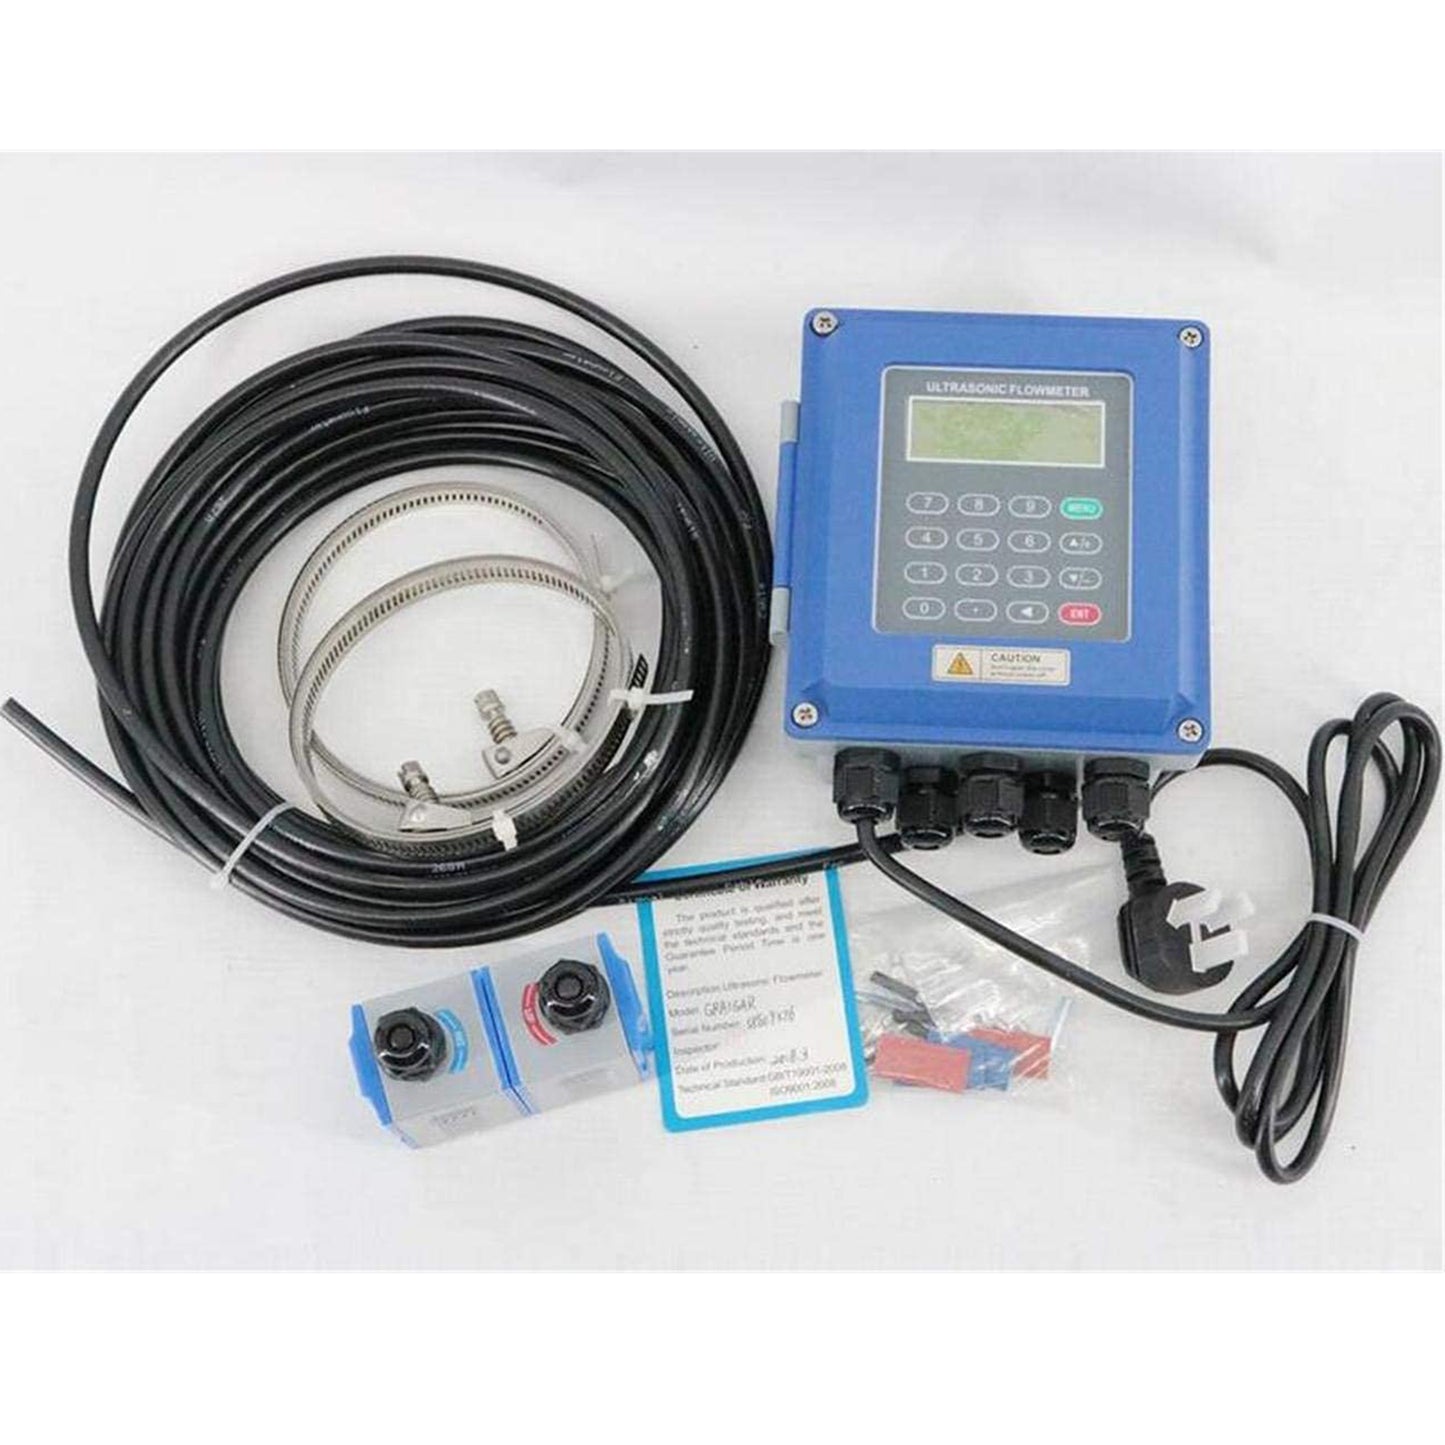 VTSYIQI Ultrasonic Flow Meters Flowmeter With DN50 to 700mm 1.97 to 27.56in Medium Clamp-on Sensor TM-1 IP67